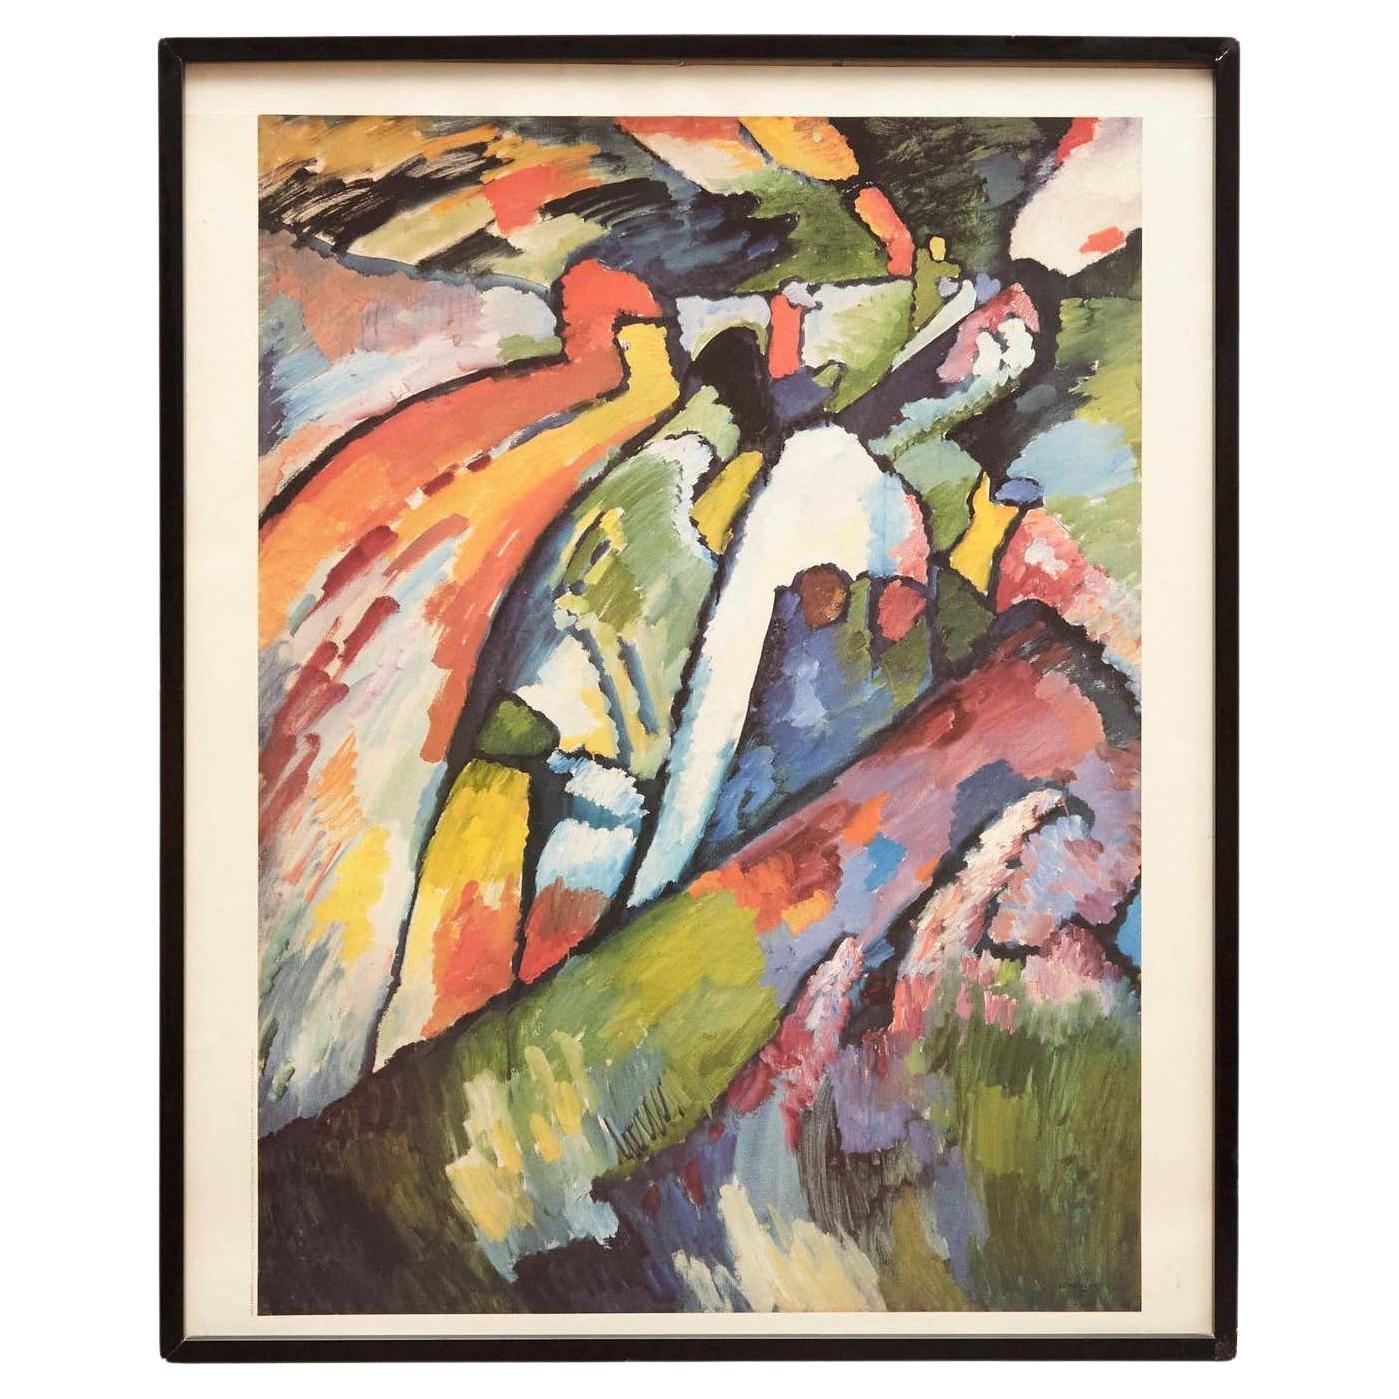  Framed kandinsky Print "Improvisation 7", circa 1990 For Sale